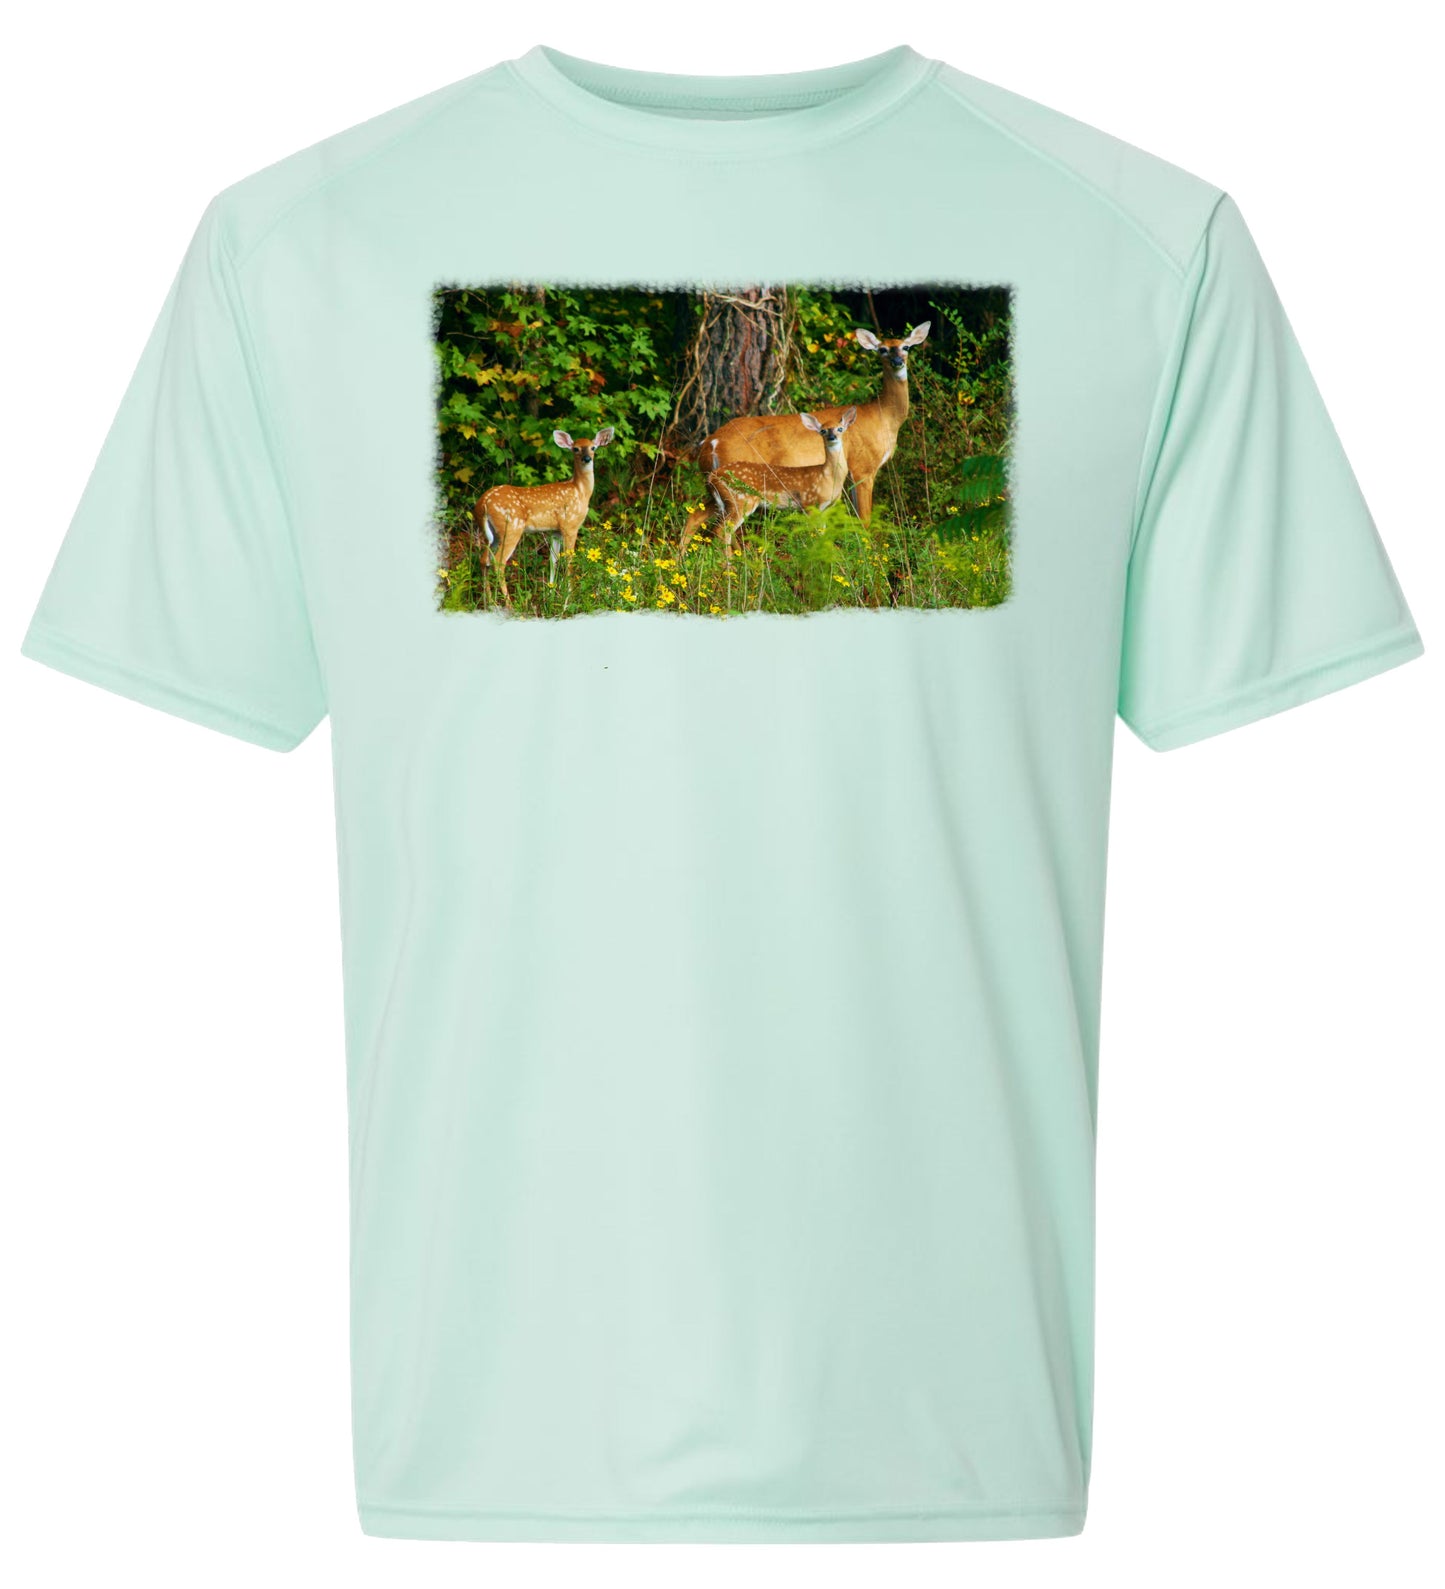 57 SW Three Deer Short Sleeve UPF 50+ Shirt Nature Shirt Outdoor Shirt Casual Shirt Gardening Shirt Hunting Shirt